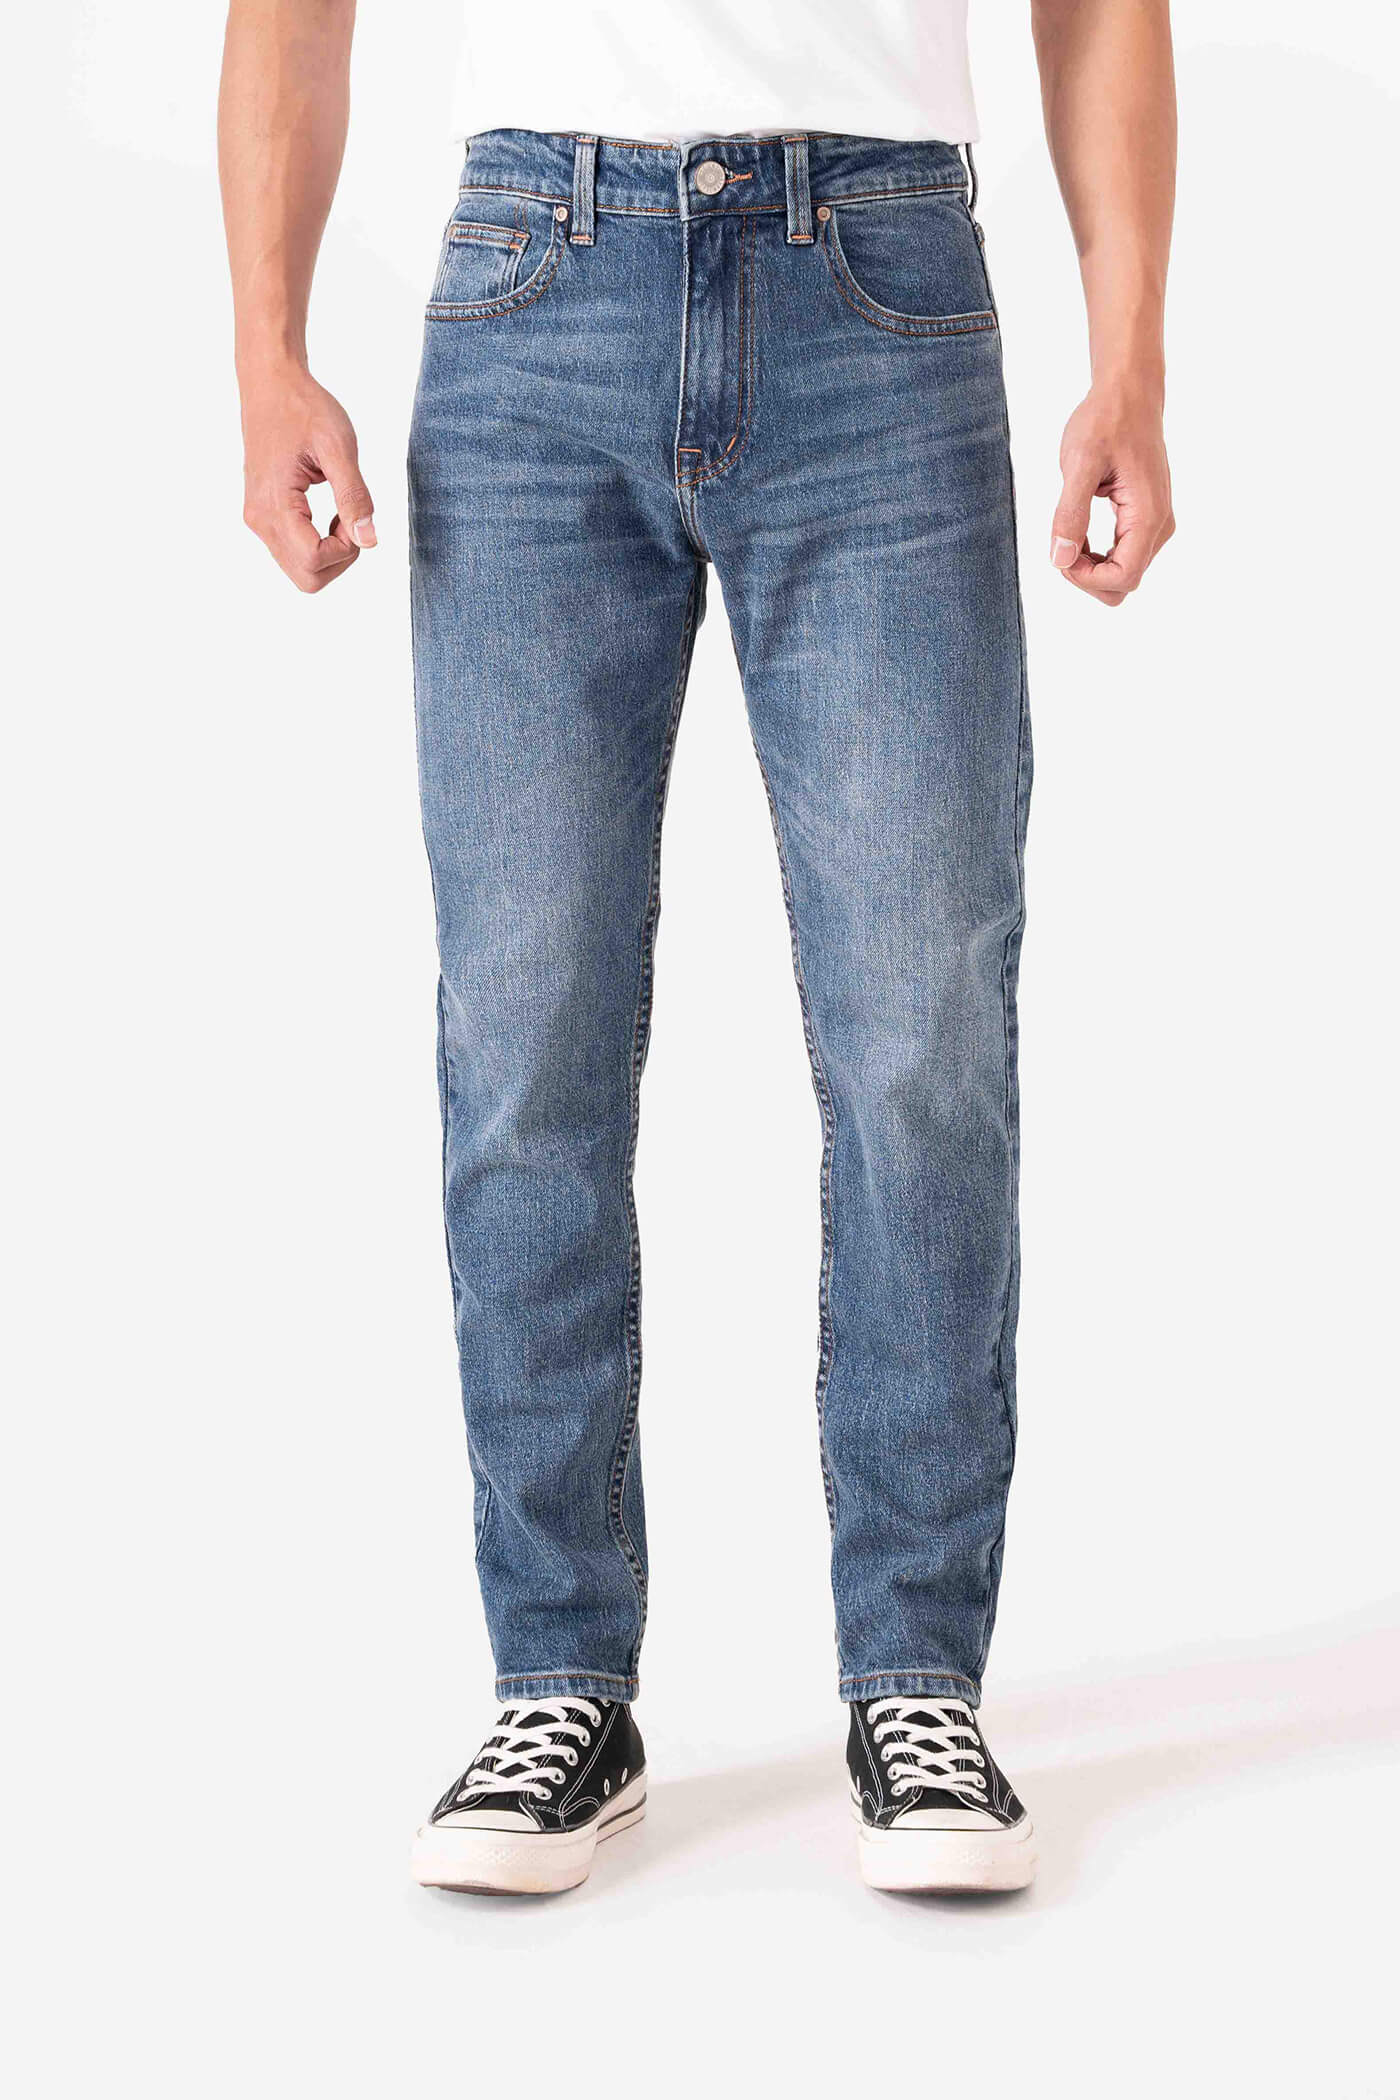 Quần Jeans Clean Denim dáng Slimfit  S3 xanh-nhat 2